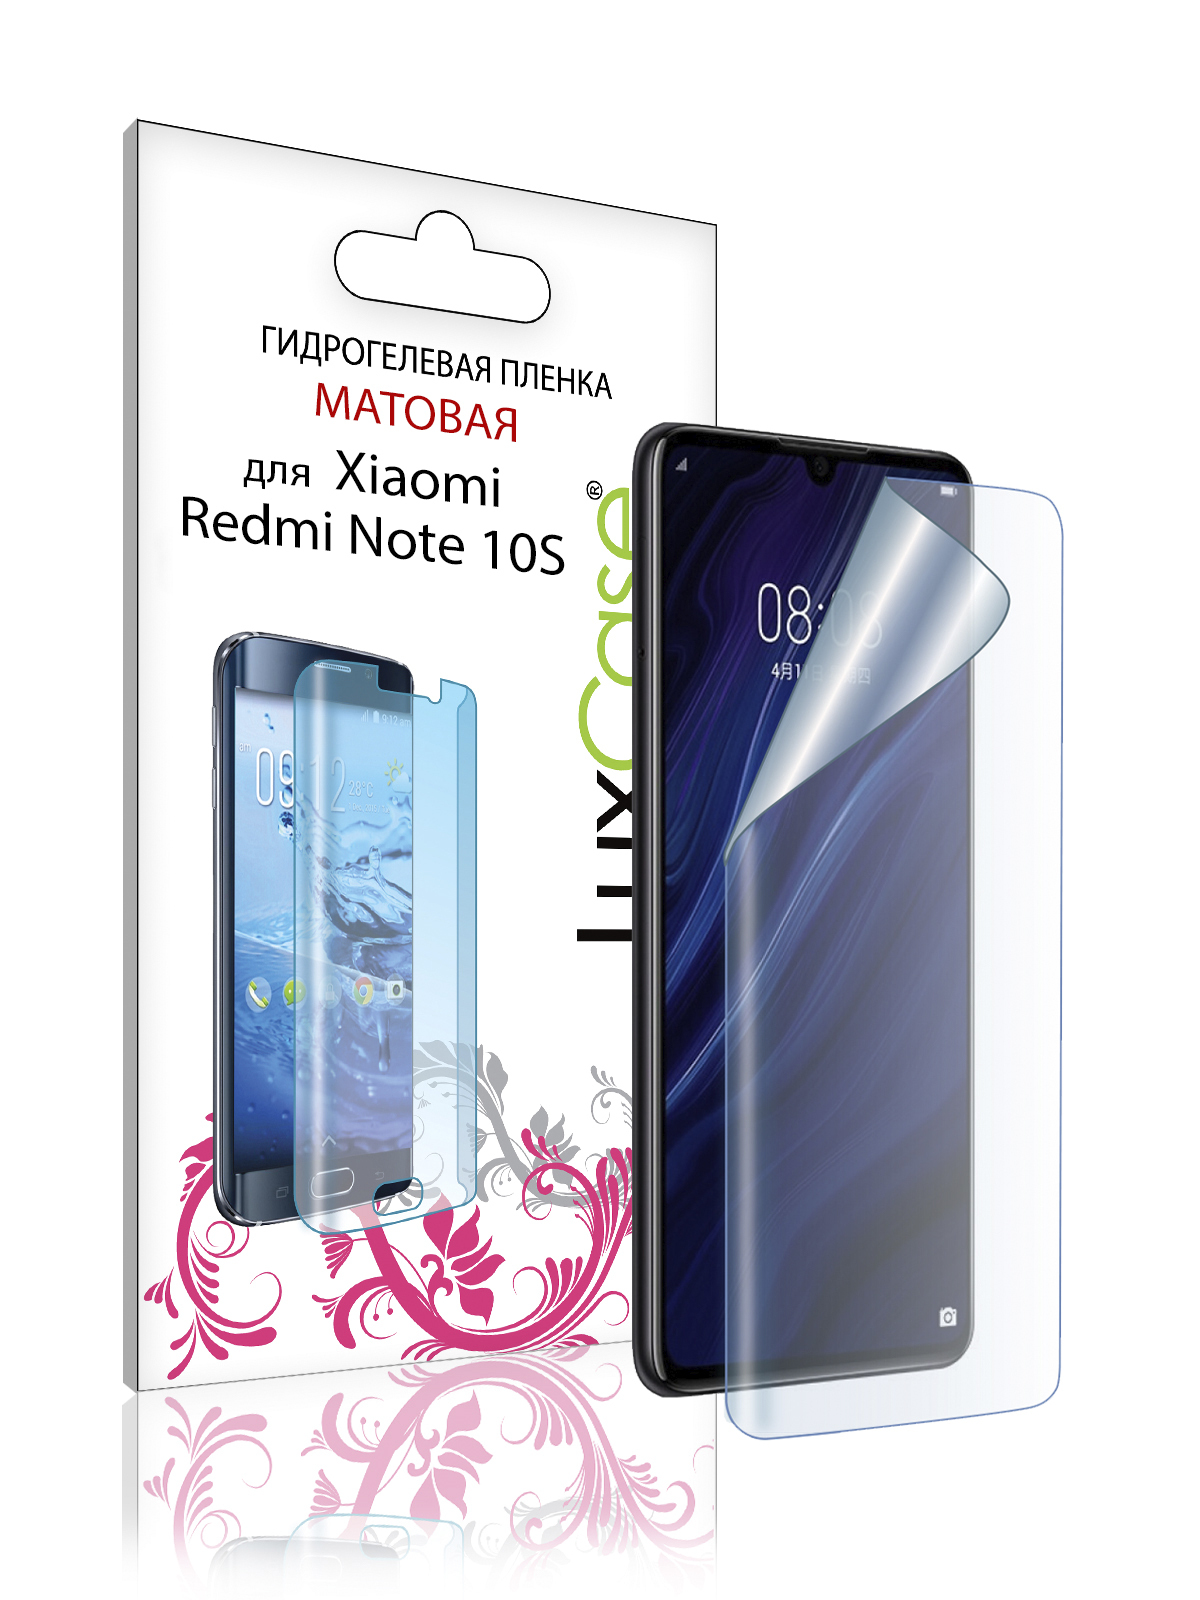 Пленка гидрогелевая LuxCase для Xiaomi Redmi Note 10s 0.14mm Матовая Front 86474 гидрогелевая пленка luxcase для xiaomi redmi note 10s 0 14mm matte front 86474